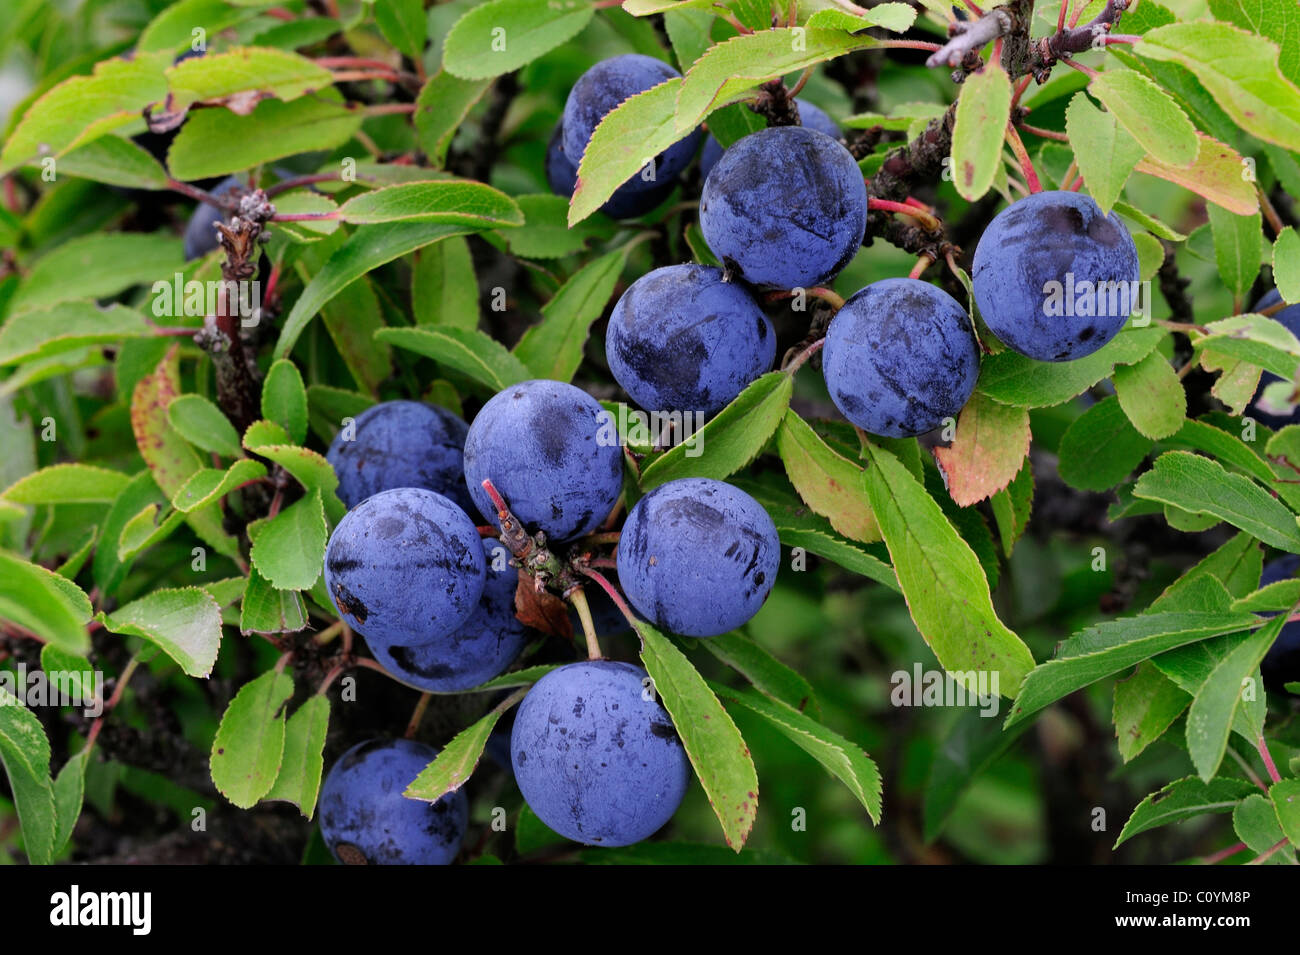 Blackthorn / sloe (Prunus spinosa) close up of black-blue berries / sloes / drupes and leaves Stock Photo